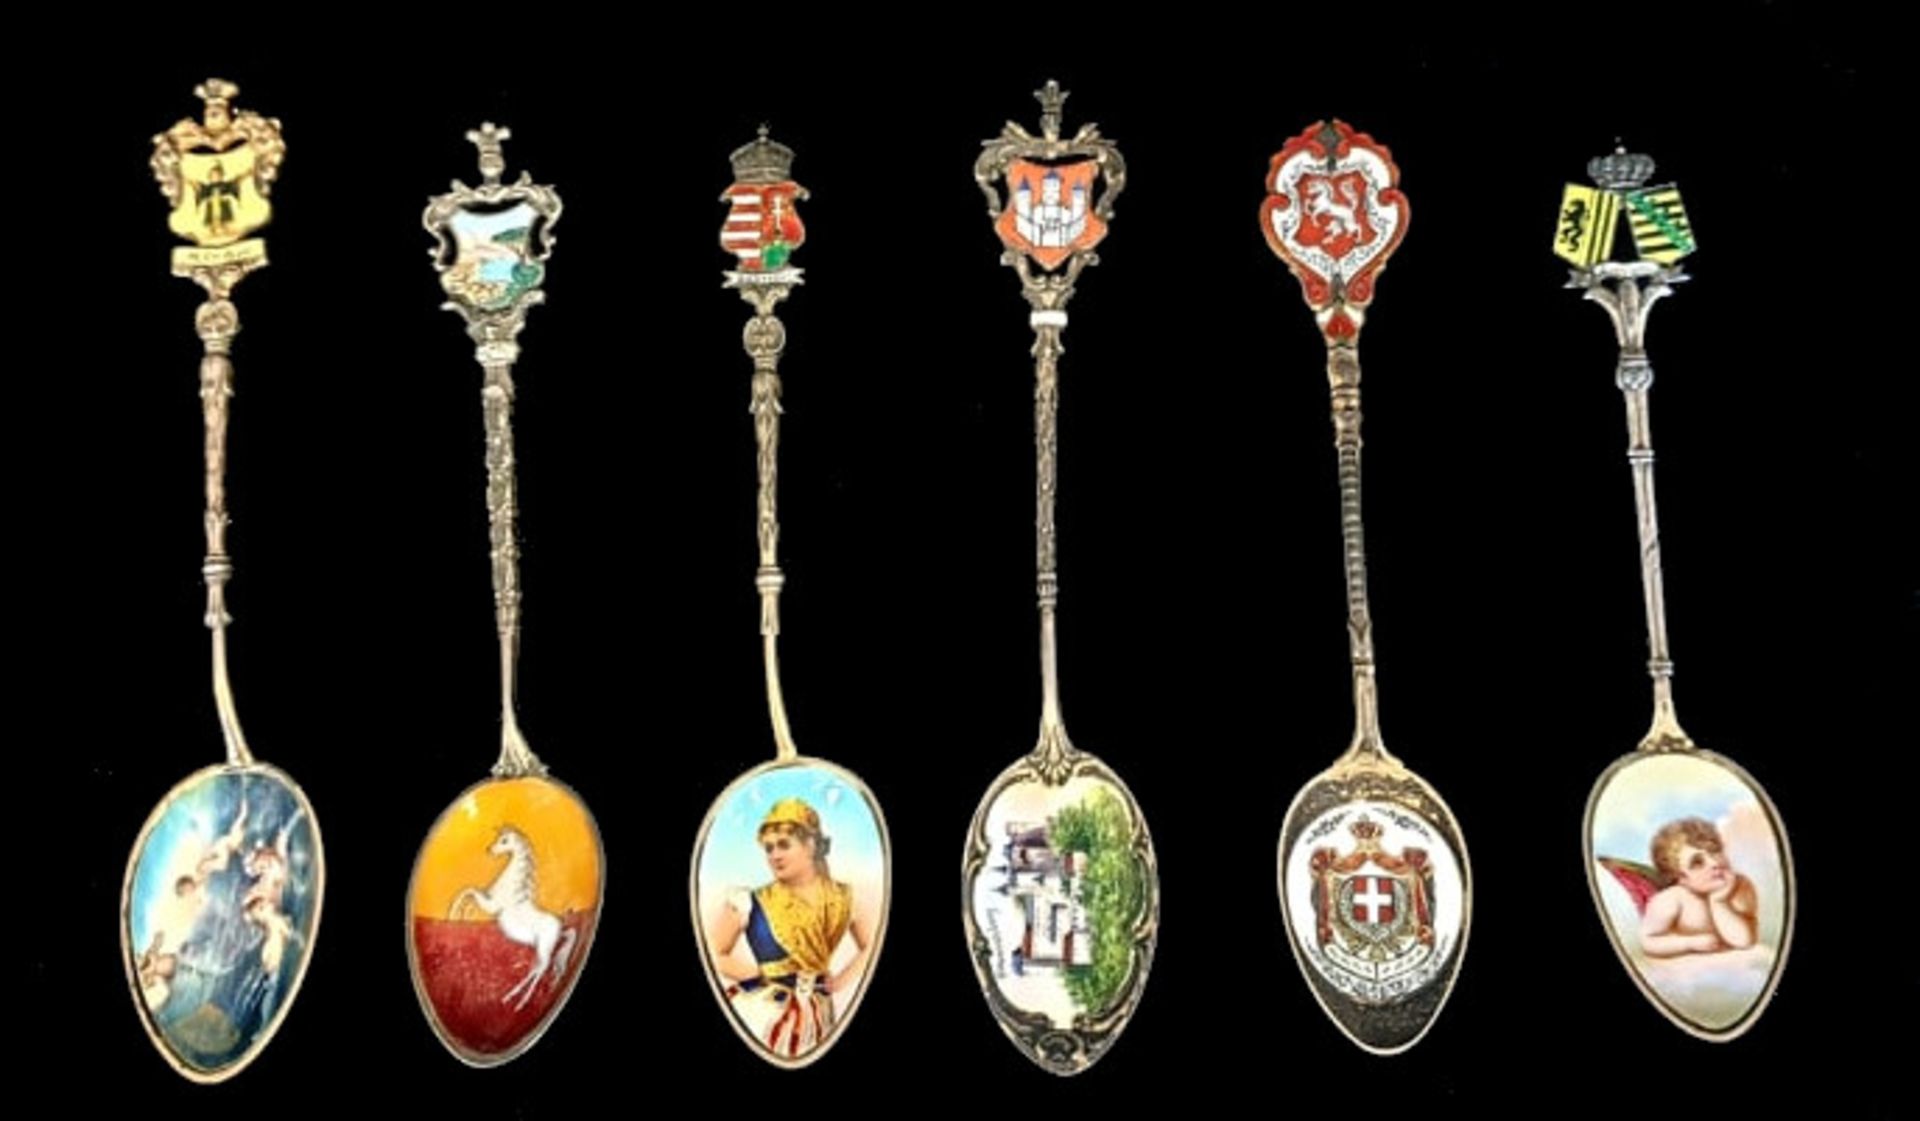 6 Souvenier Spoons | Silver & Enamel